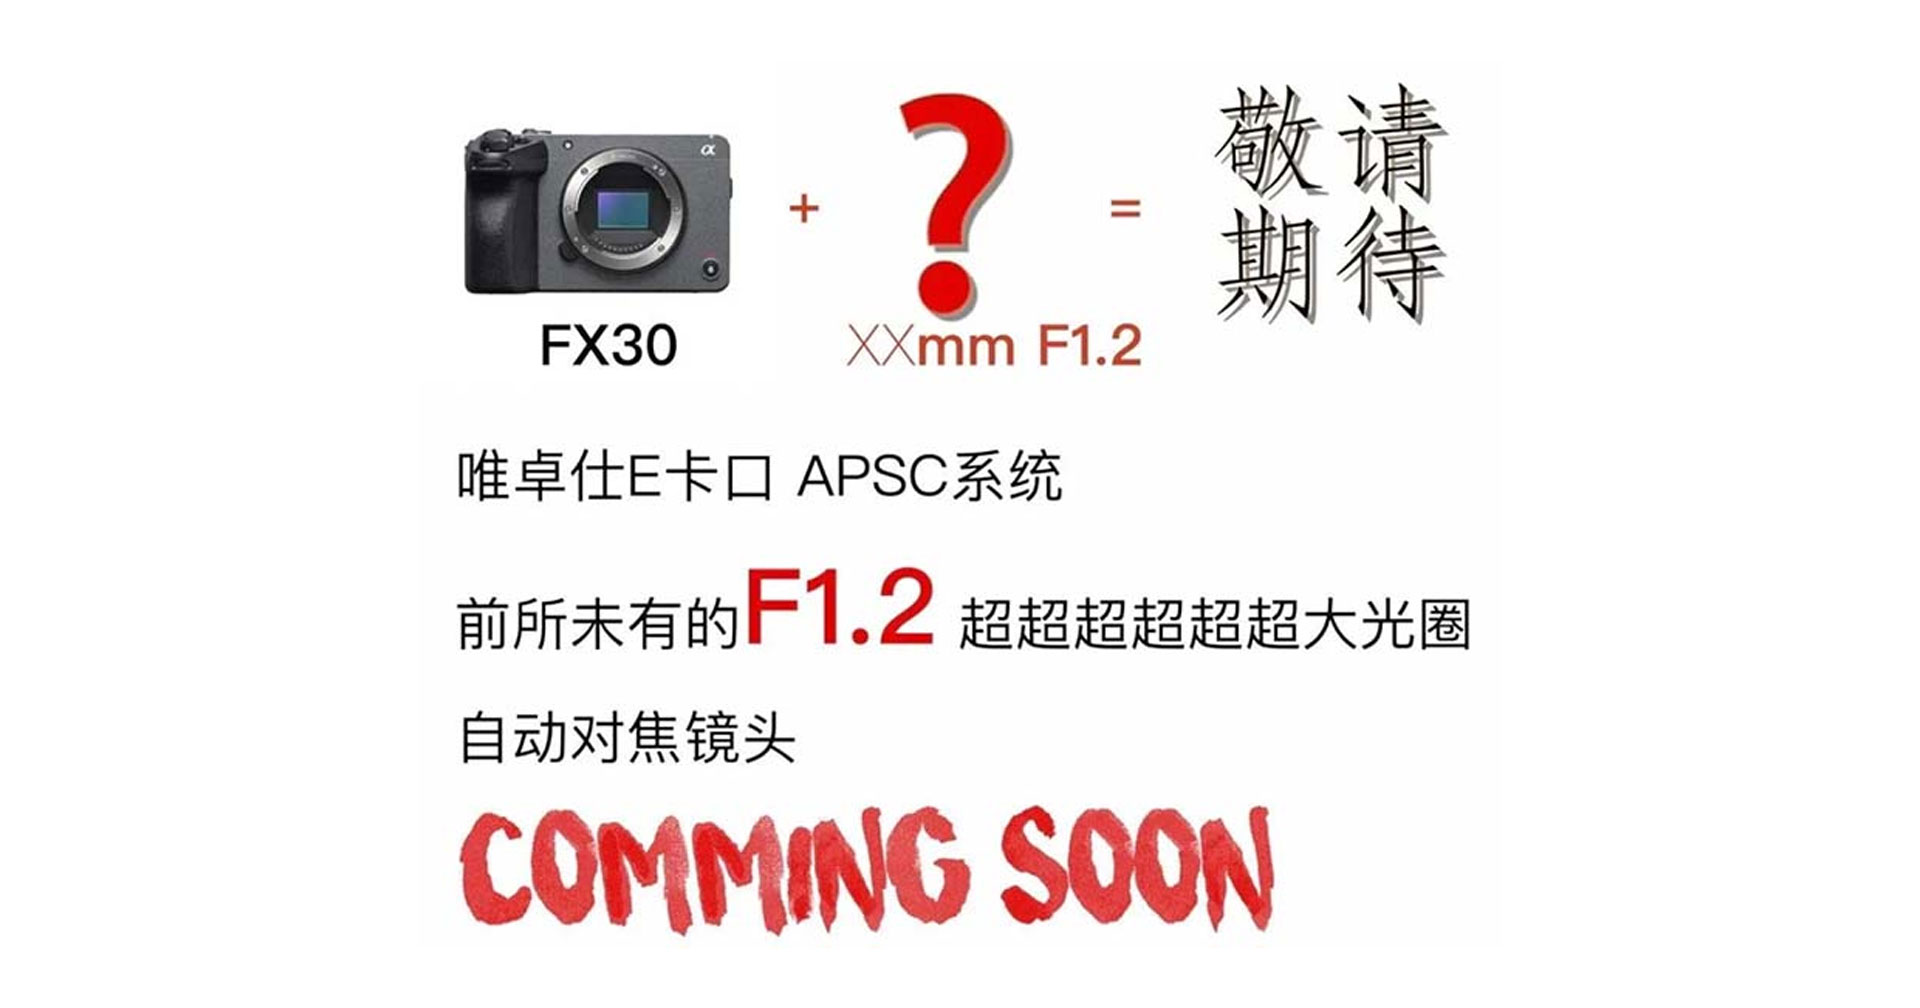 Viltrox ปล่อย teaser เตรียมเปิดตัวเลนส์ F1.2 สำหรับกล้อง Sony APS-C เร็ว ๆ นี้